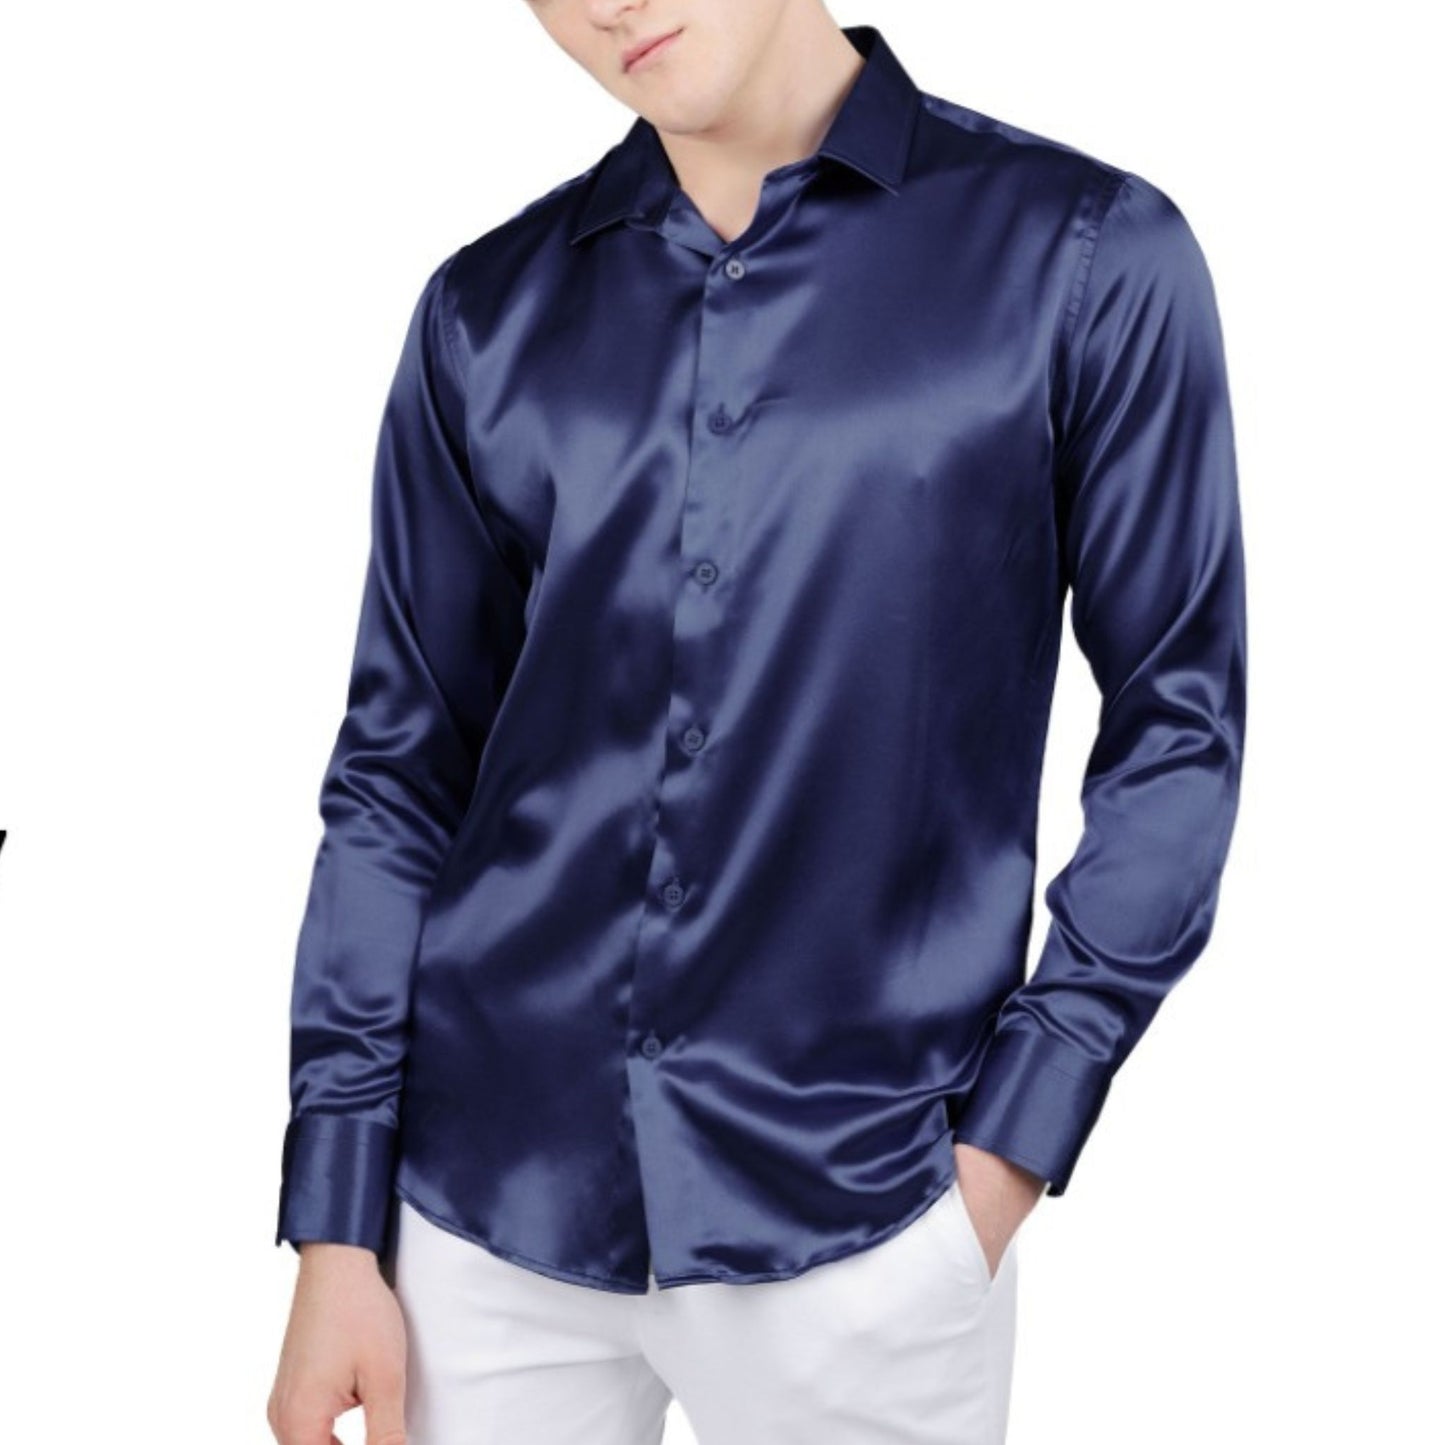 Elegant midnight blue satin dress shirt from KCT Menswear, perfect for formal evenings.